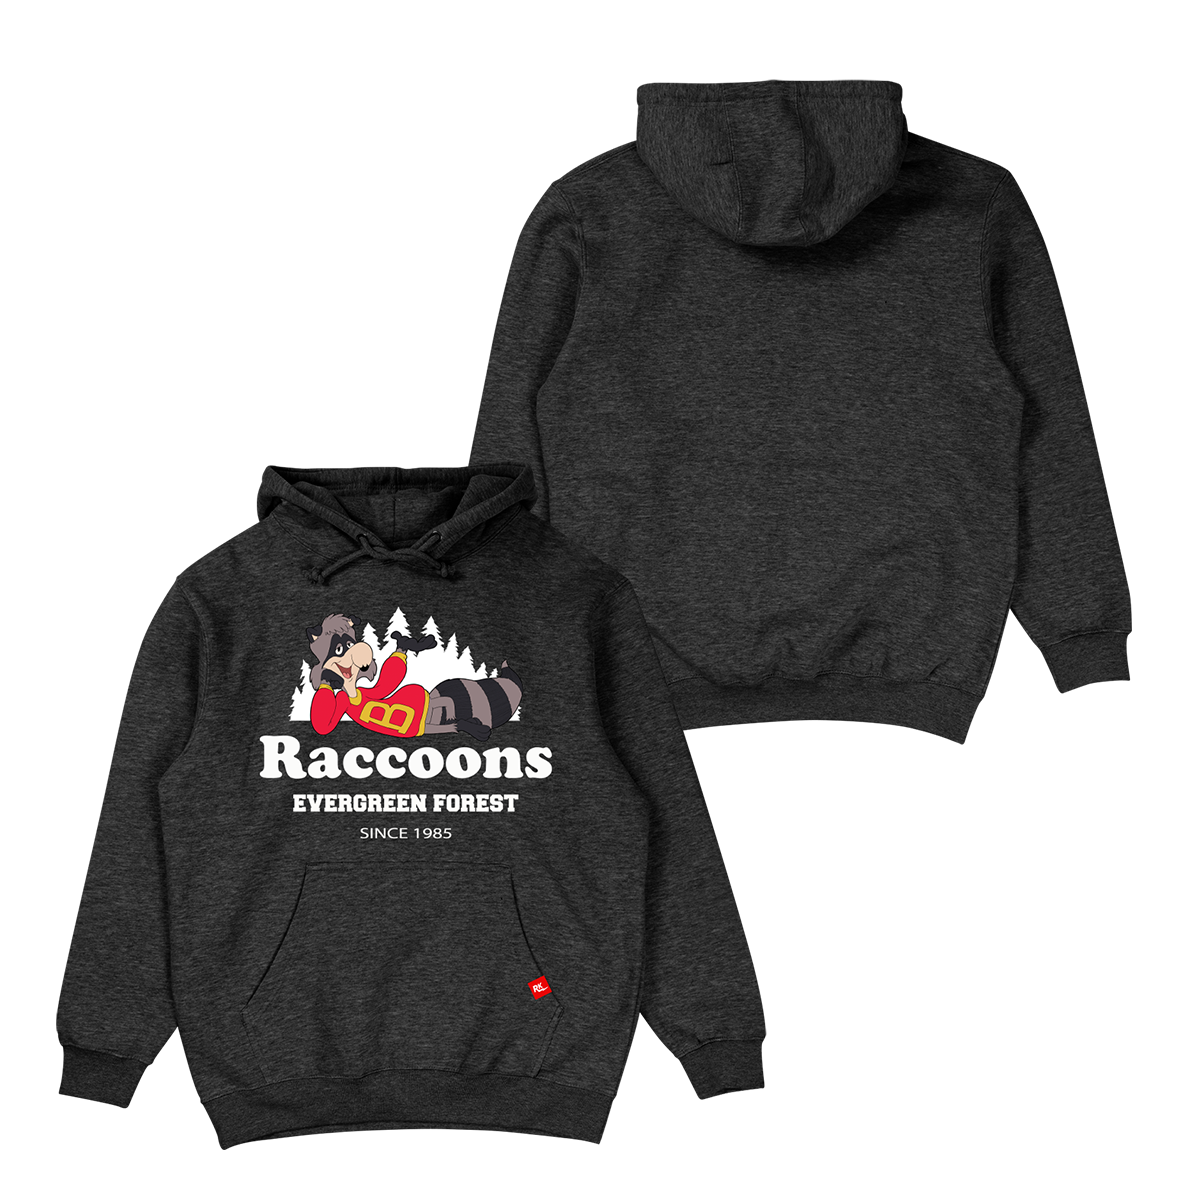 Richmond Greyhounds Verani Sports” graphic tee, pullover hoodie